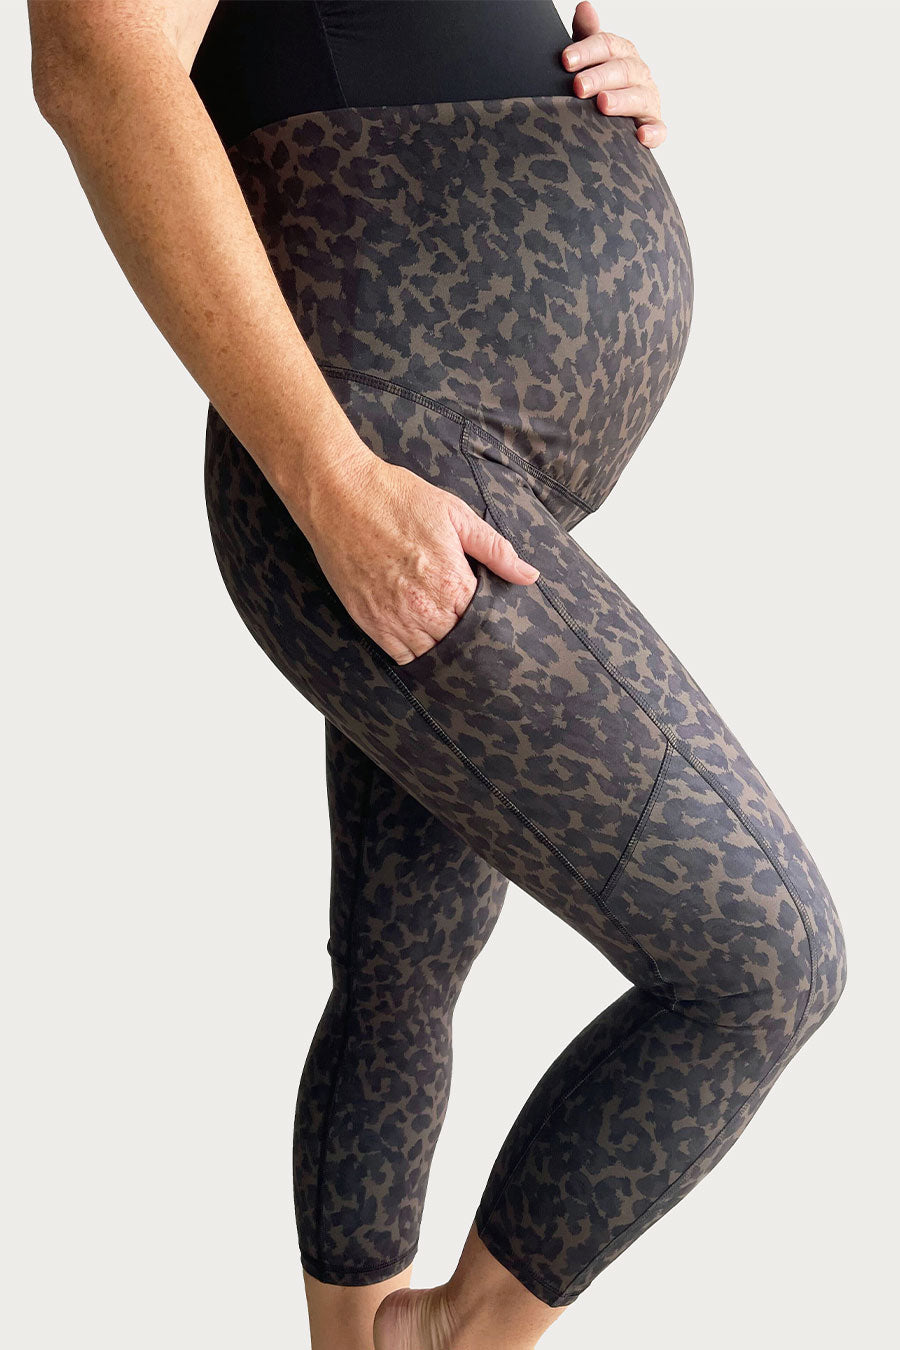 Pregnancy Pocket 7/8 Length Tight - Leopard